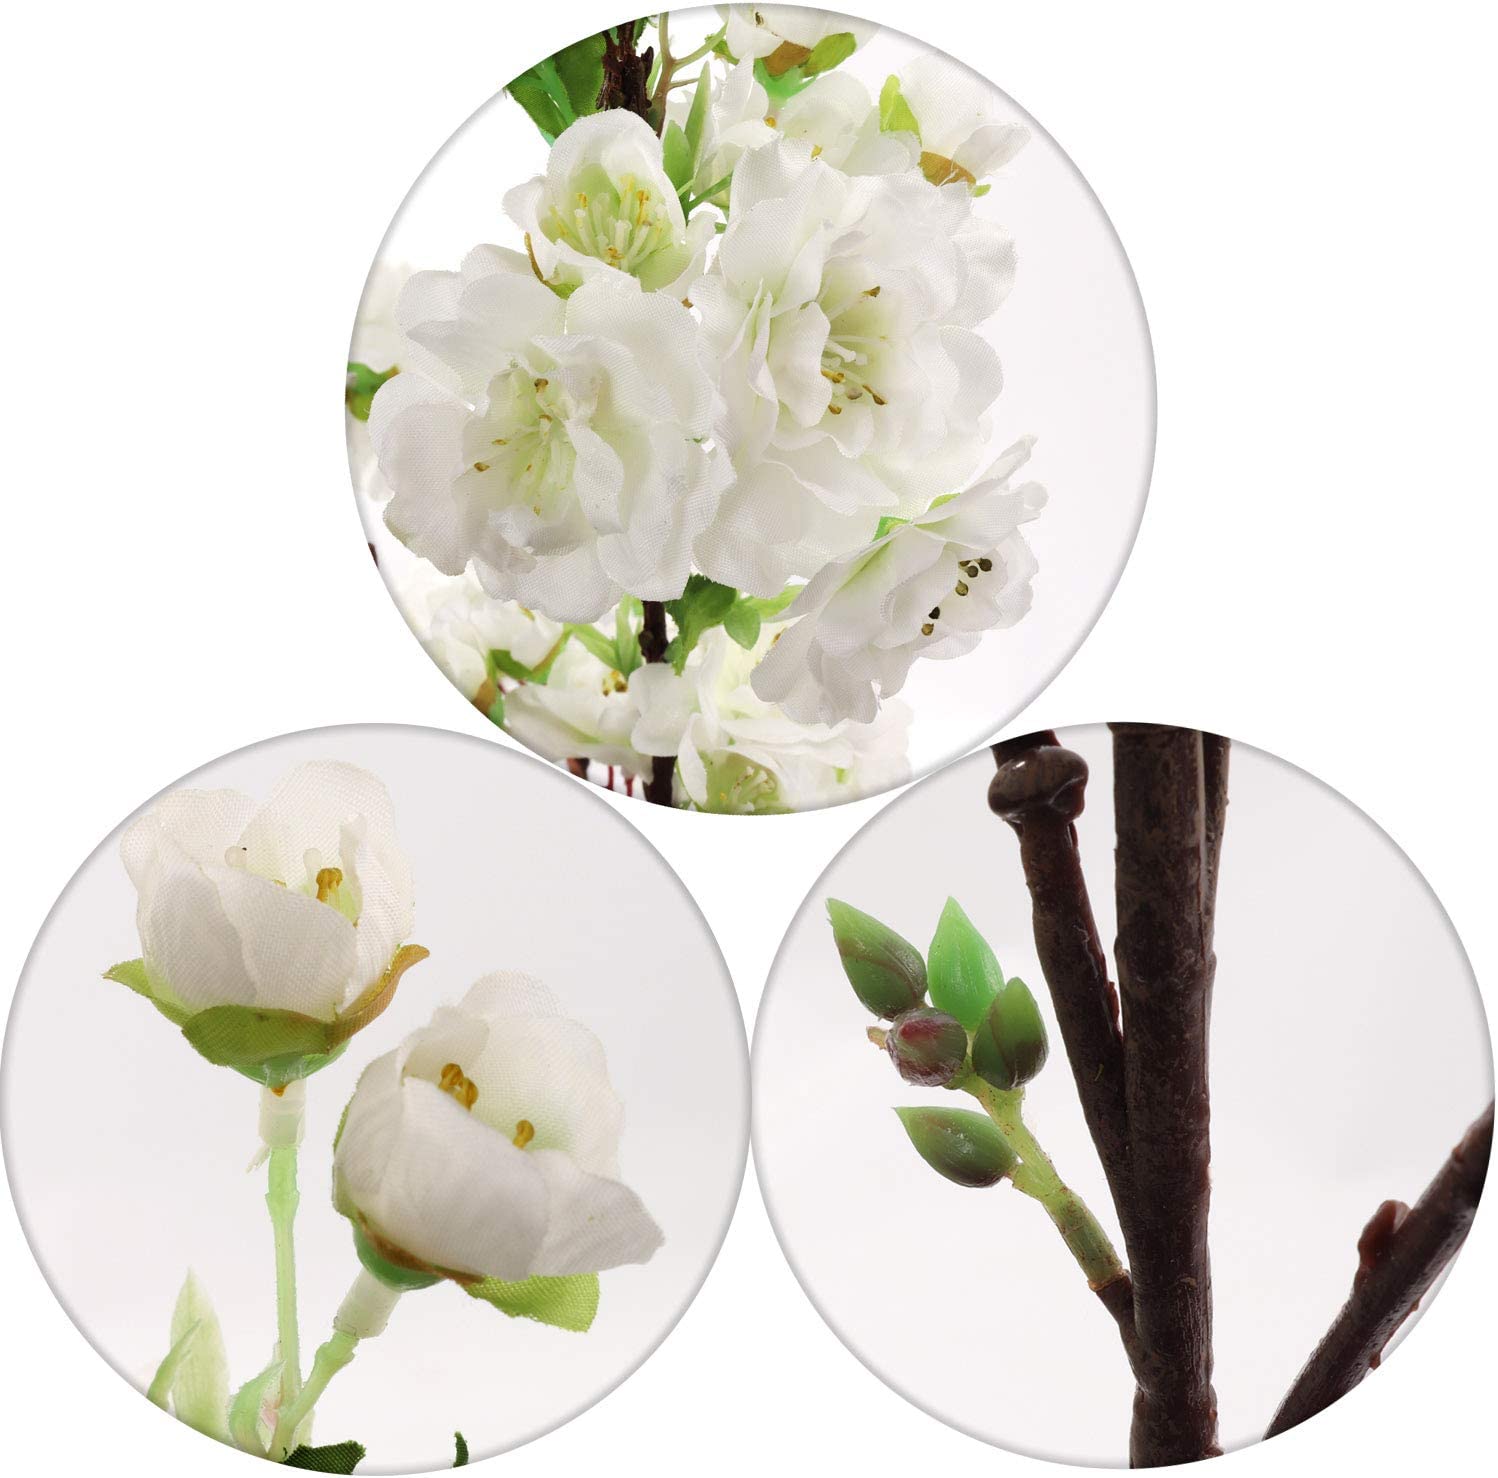 White Cherry Blossom Flowers, One 45 Inch Blossom Branch